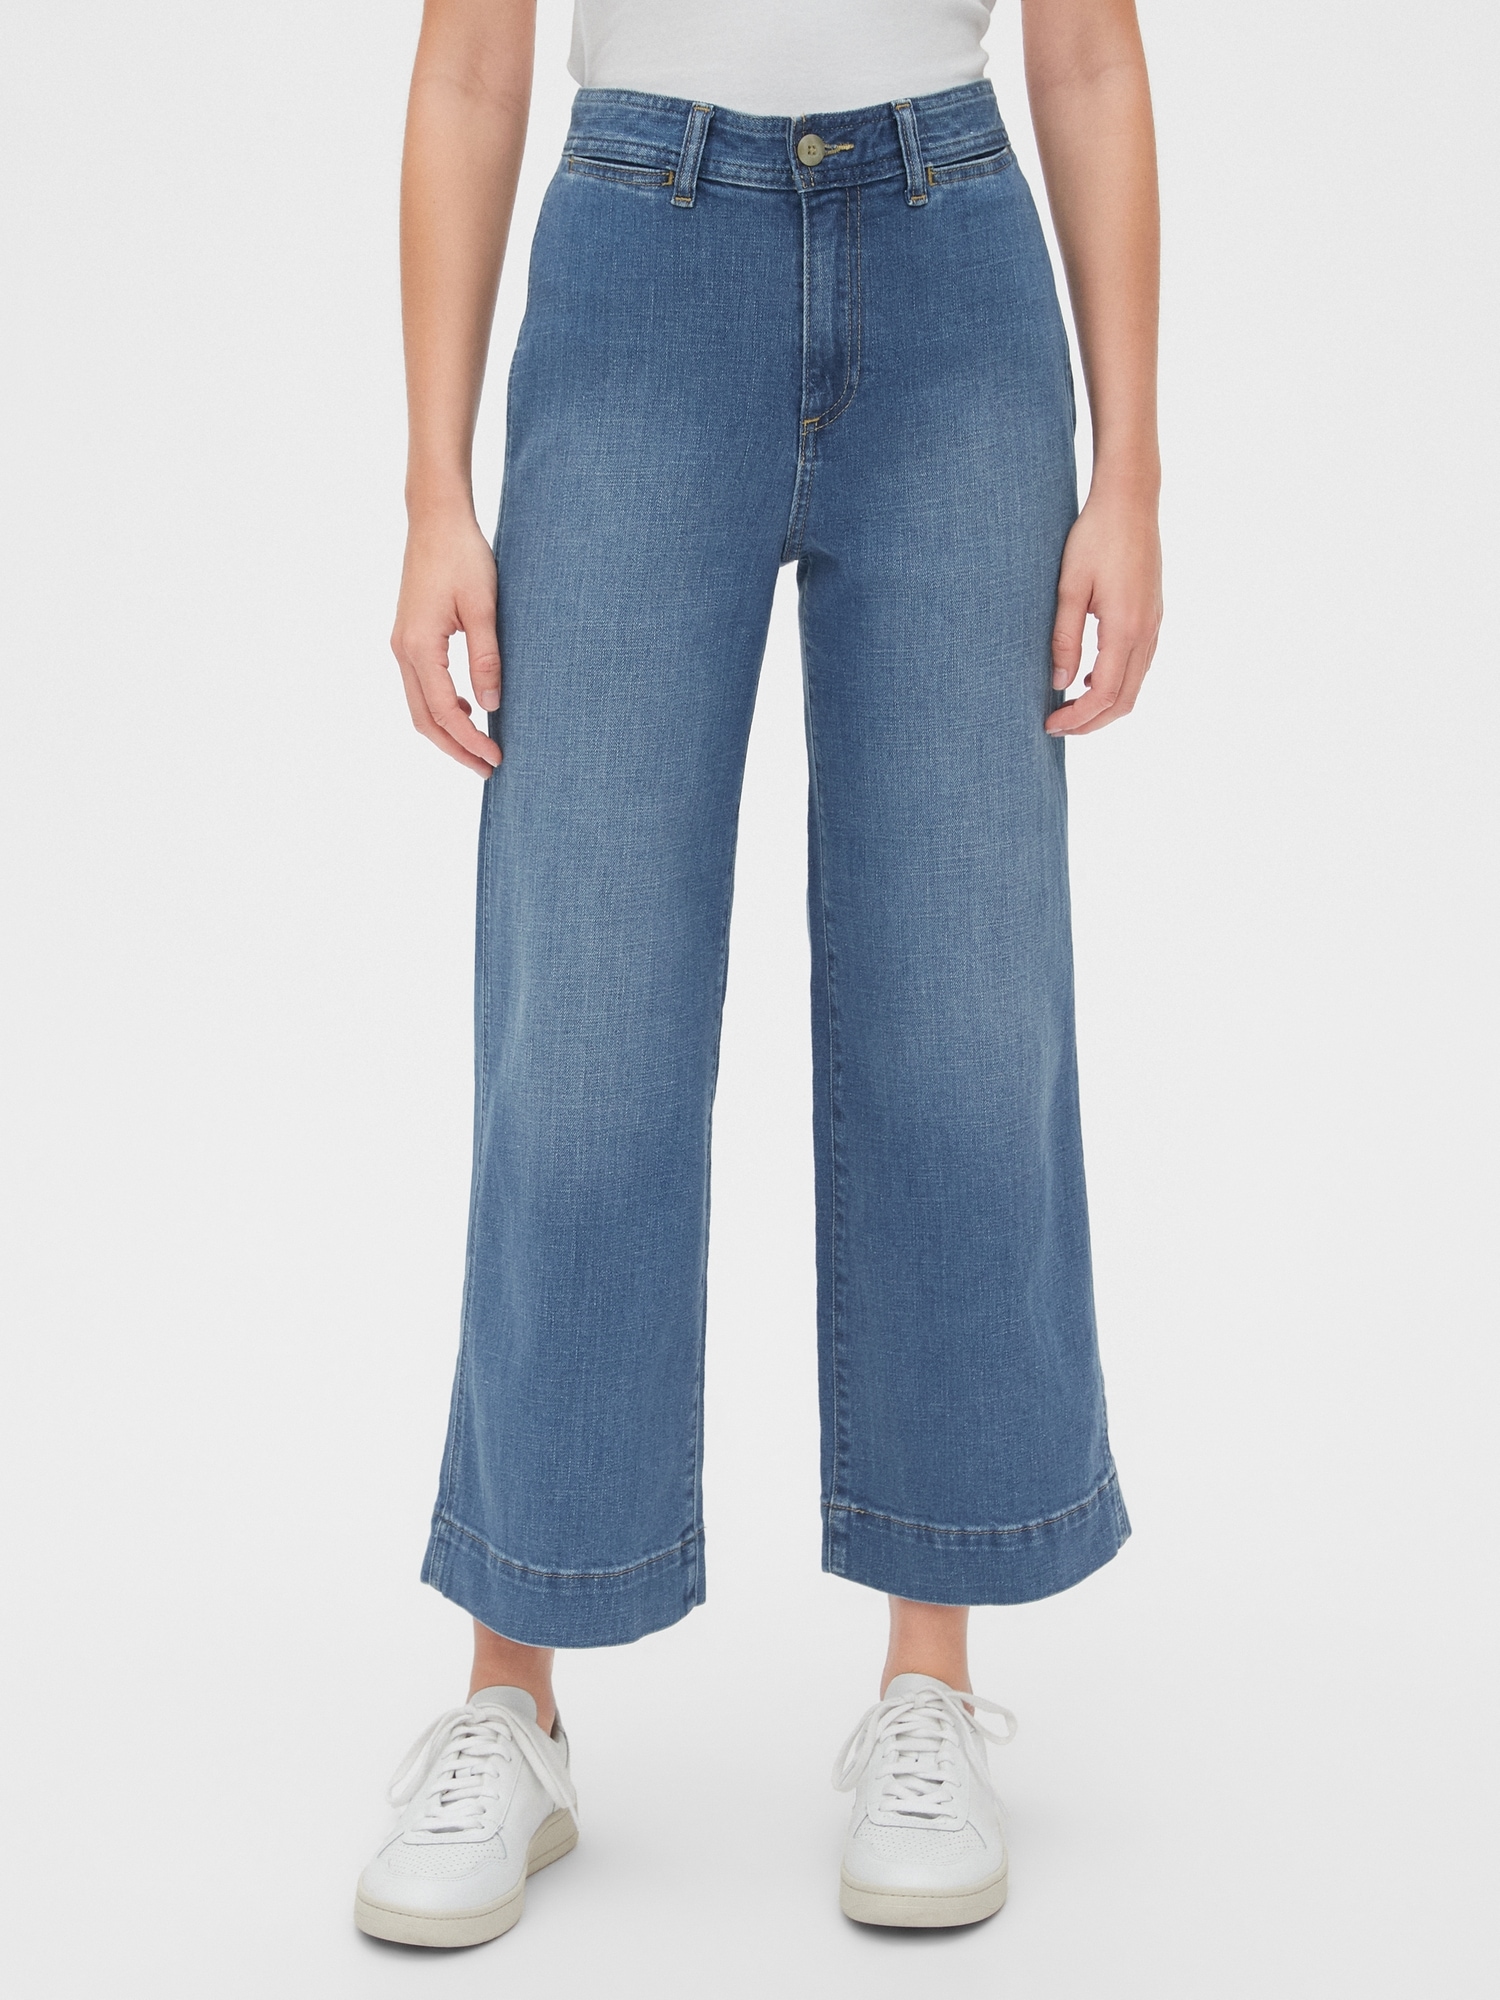 gap high waisted jeans